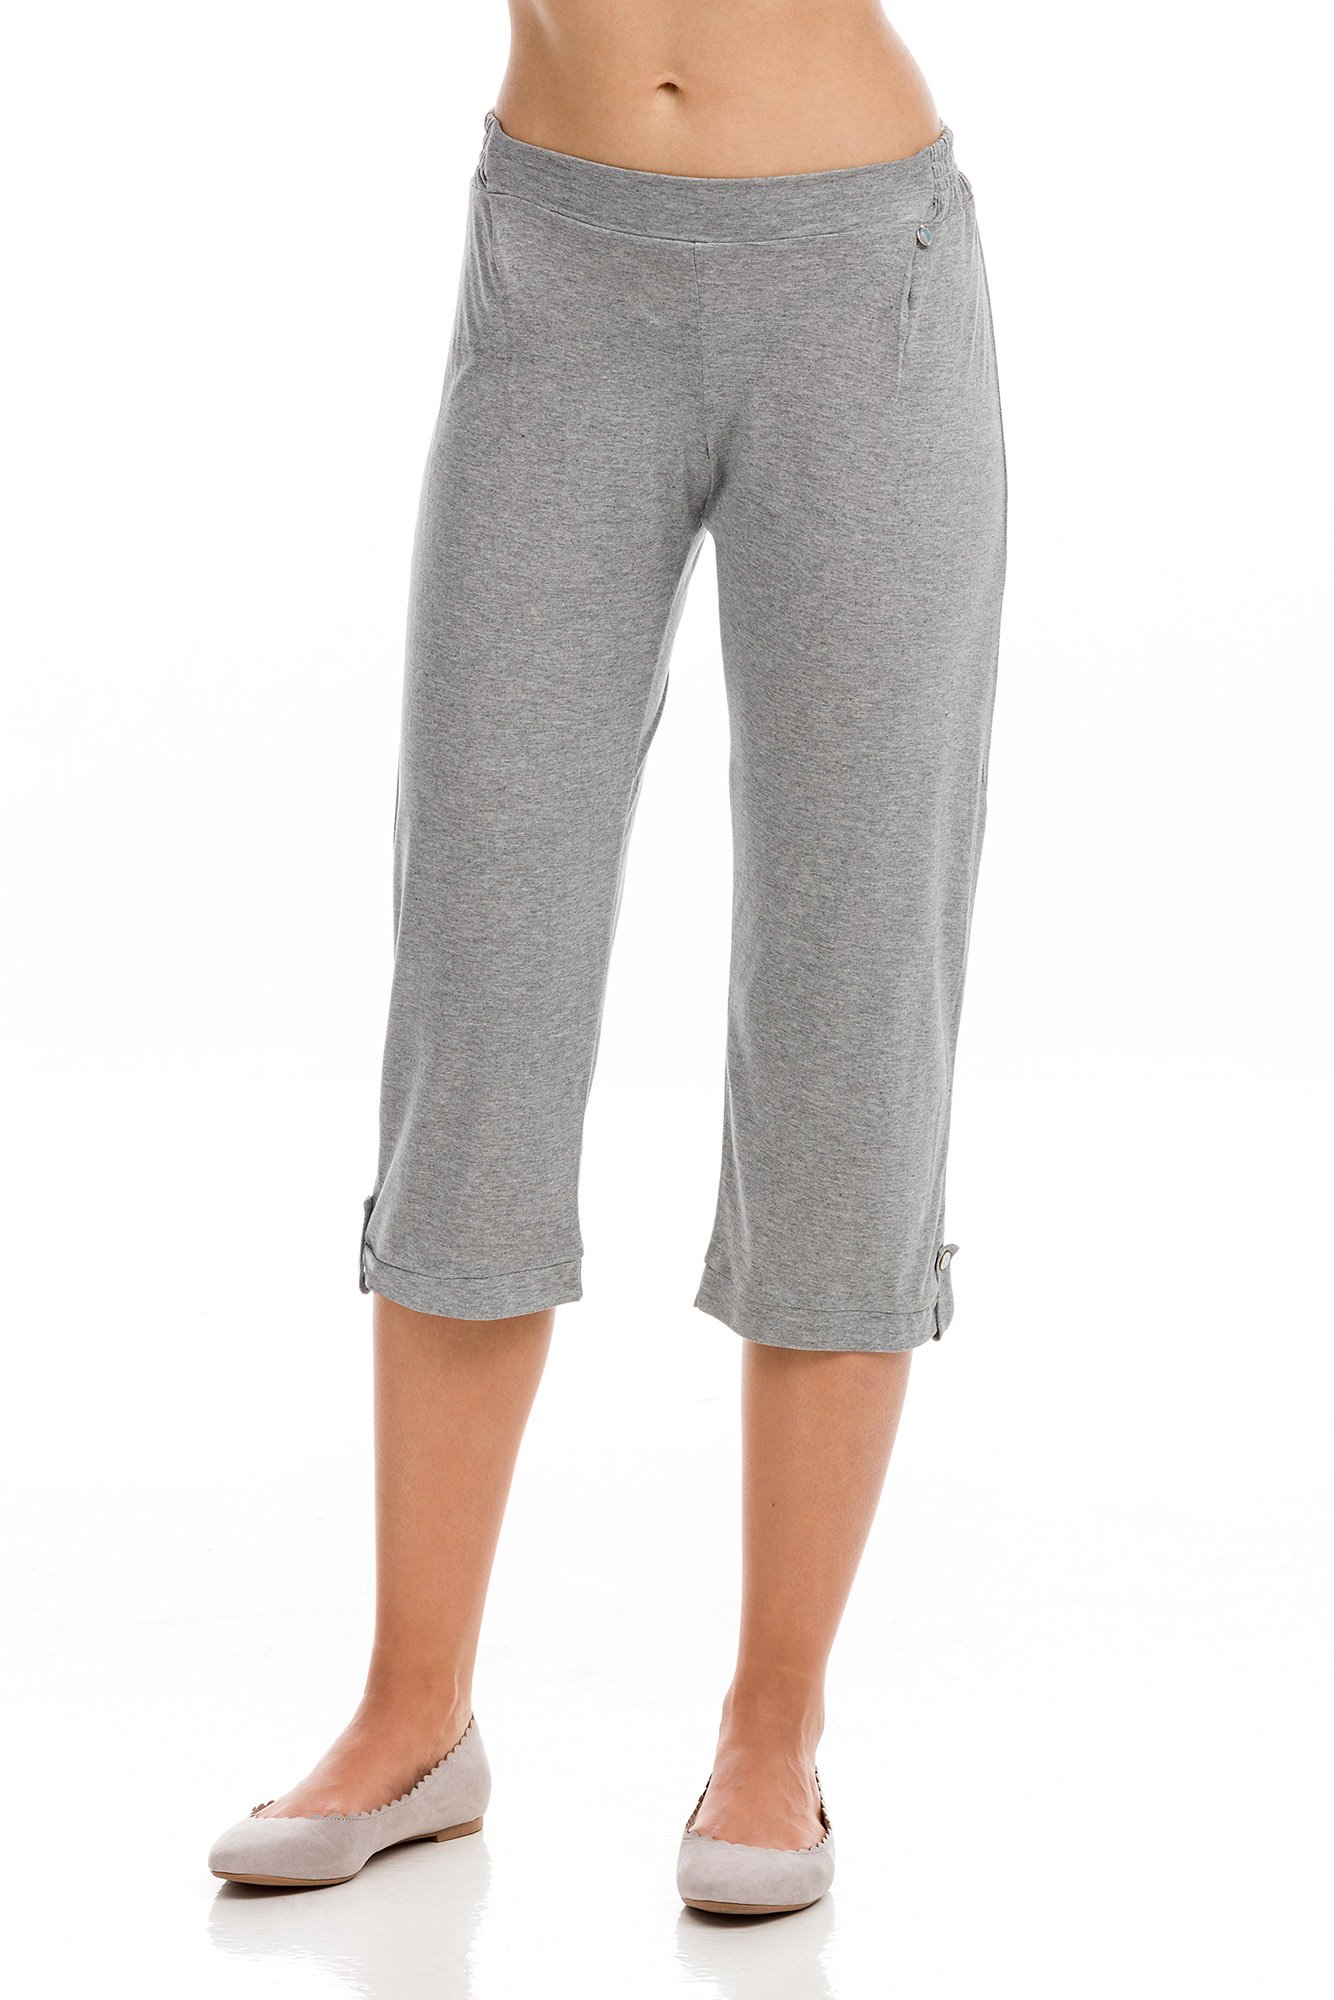 Women's Plain Capri Pants - Underwear Point